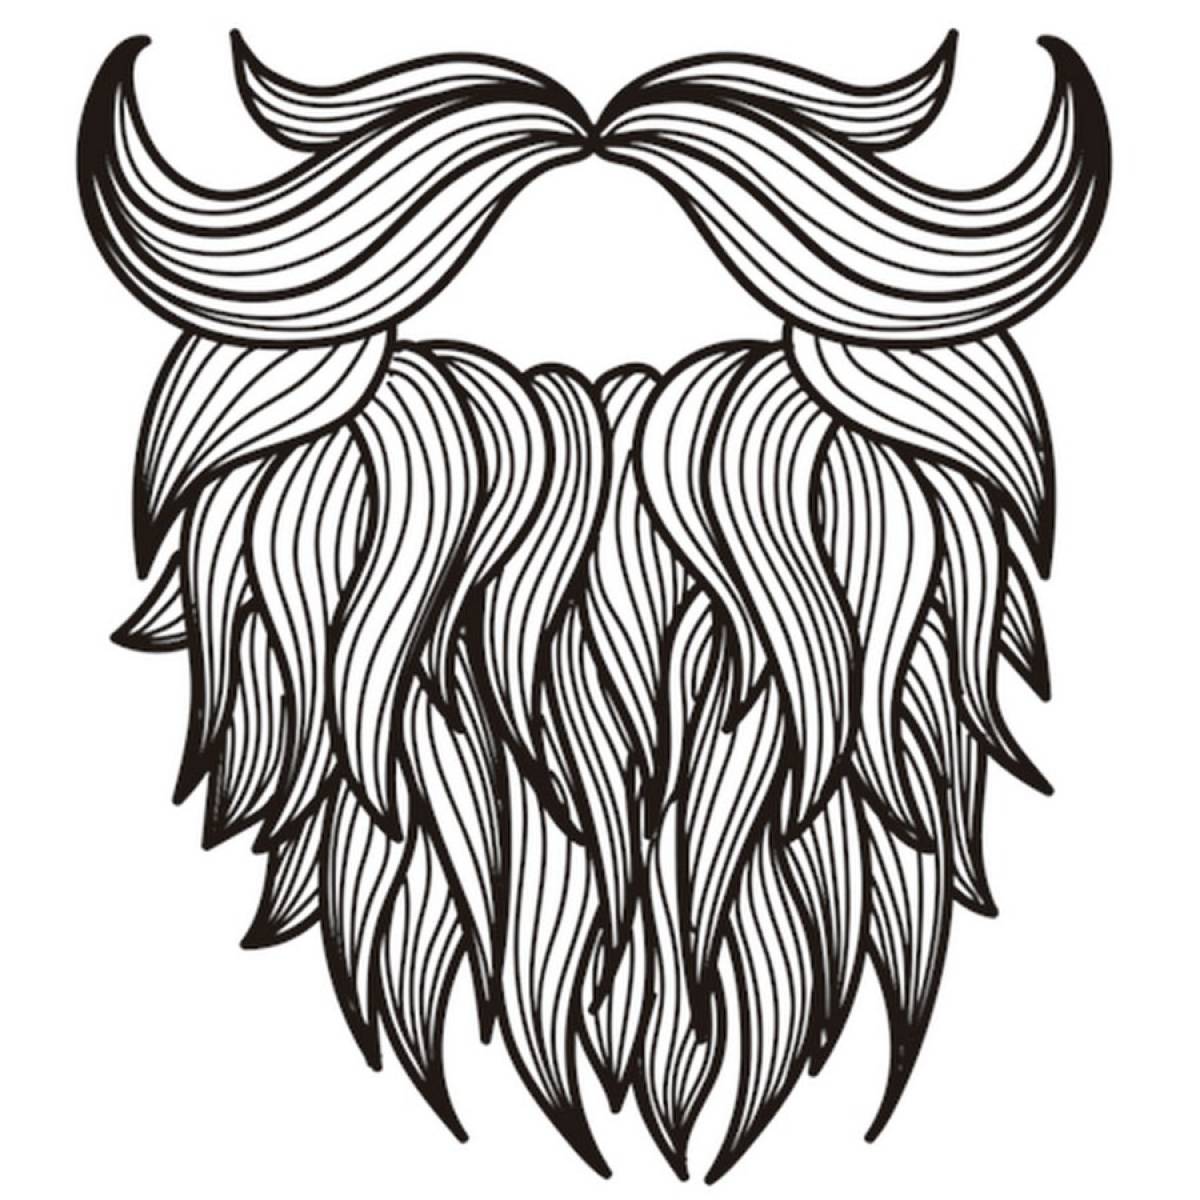 Beard #1